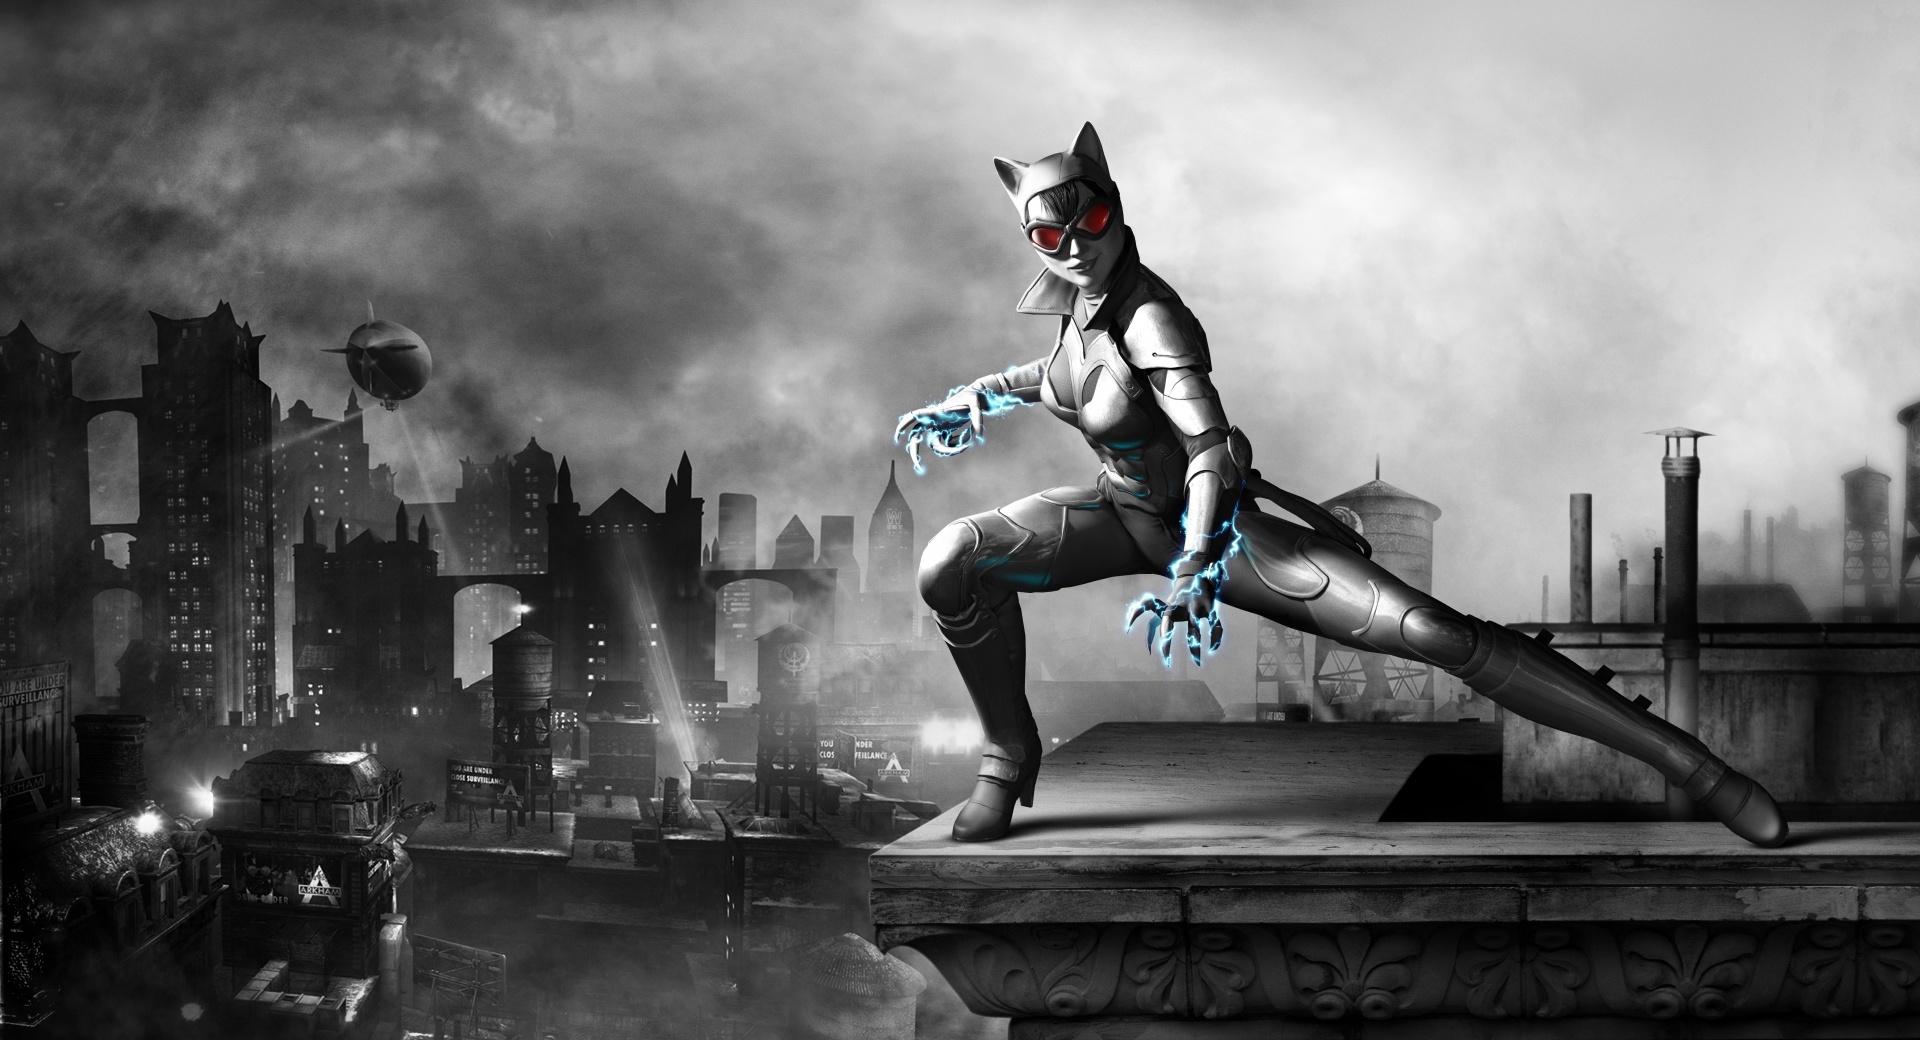 Batman Arkham City - Catwoman Night at 1024 x 1024 iPad size wallpapers HD quality